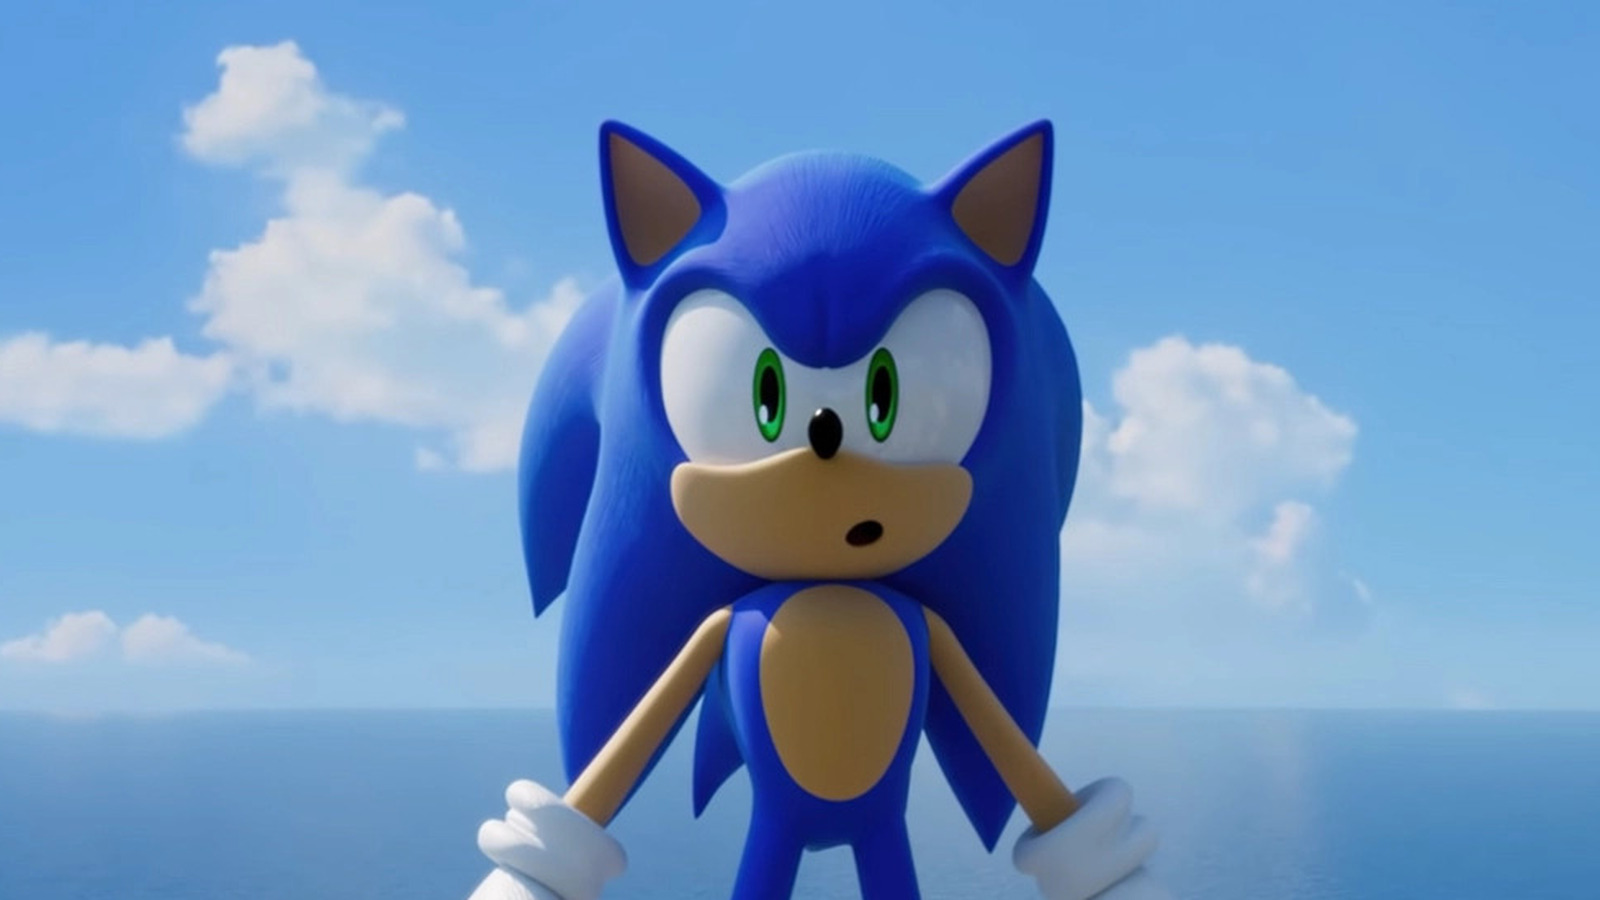 Sonic The Hedgehog (2006) - THE MOVIE - Full Movie (ALL CUTSCENES